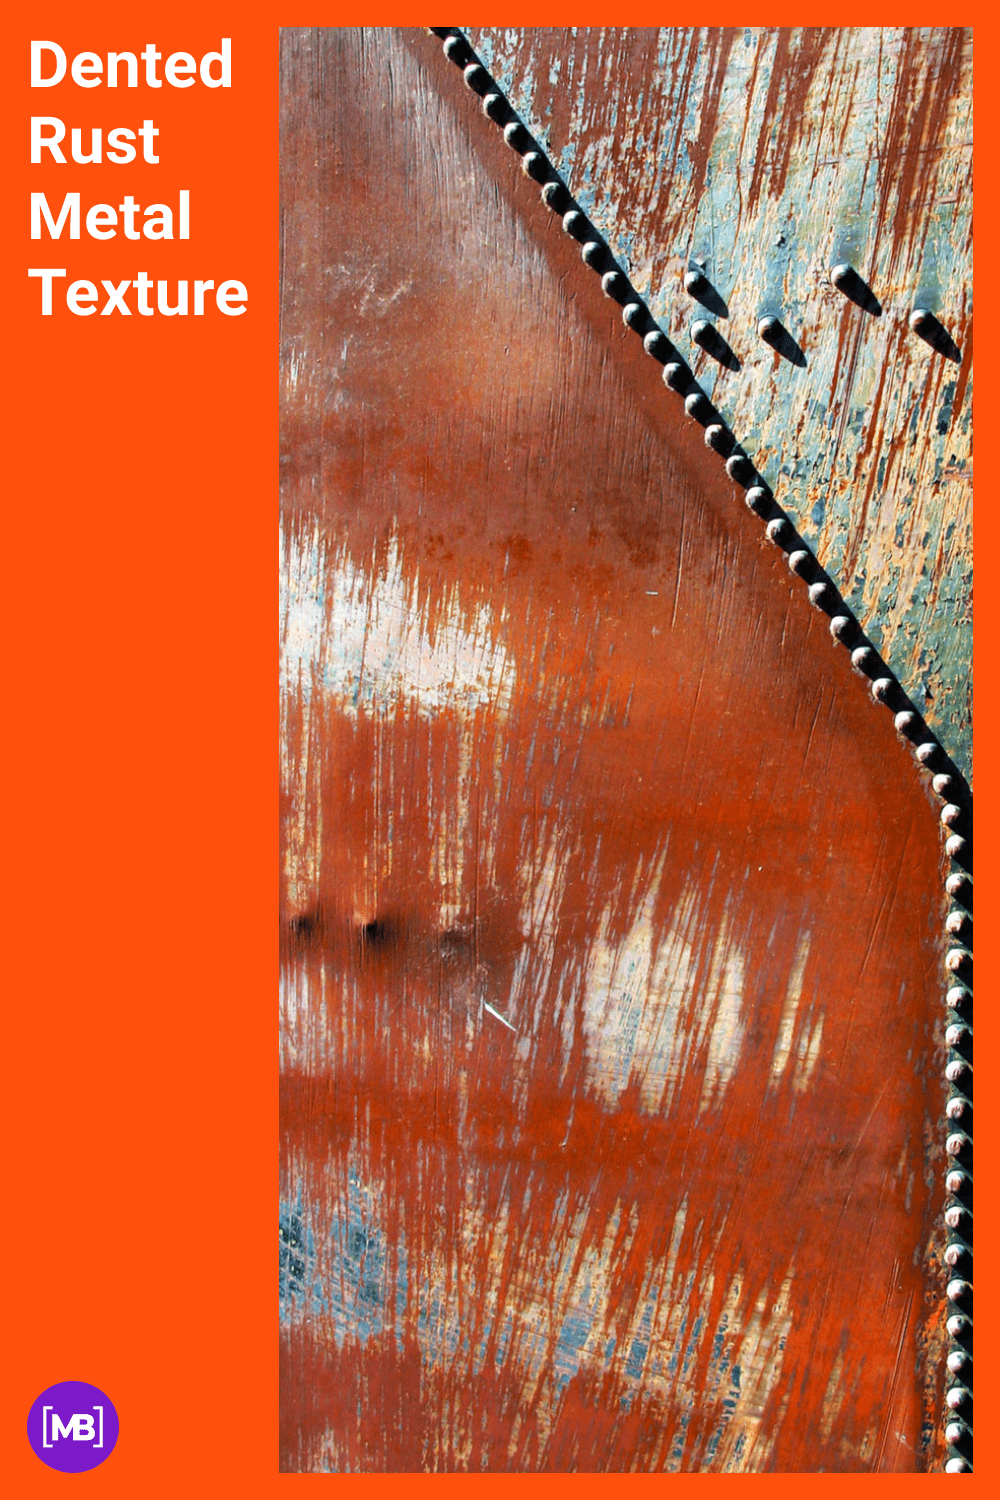 Dented Rust Metal Texture.